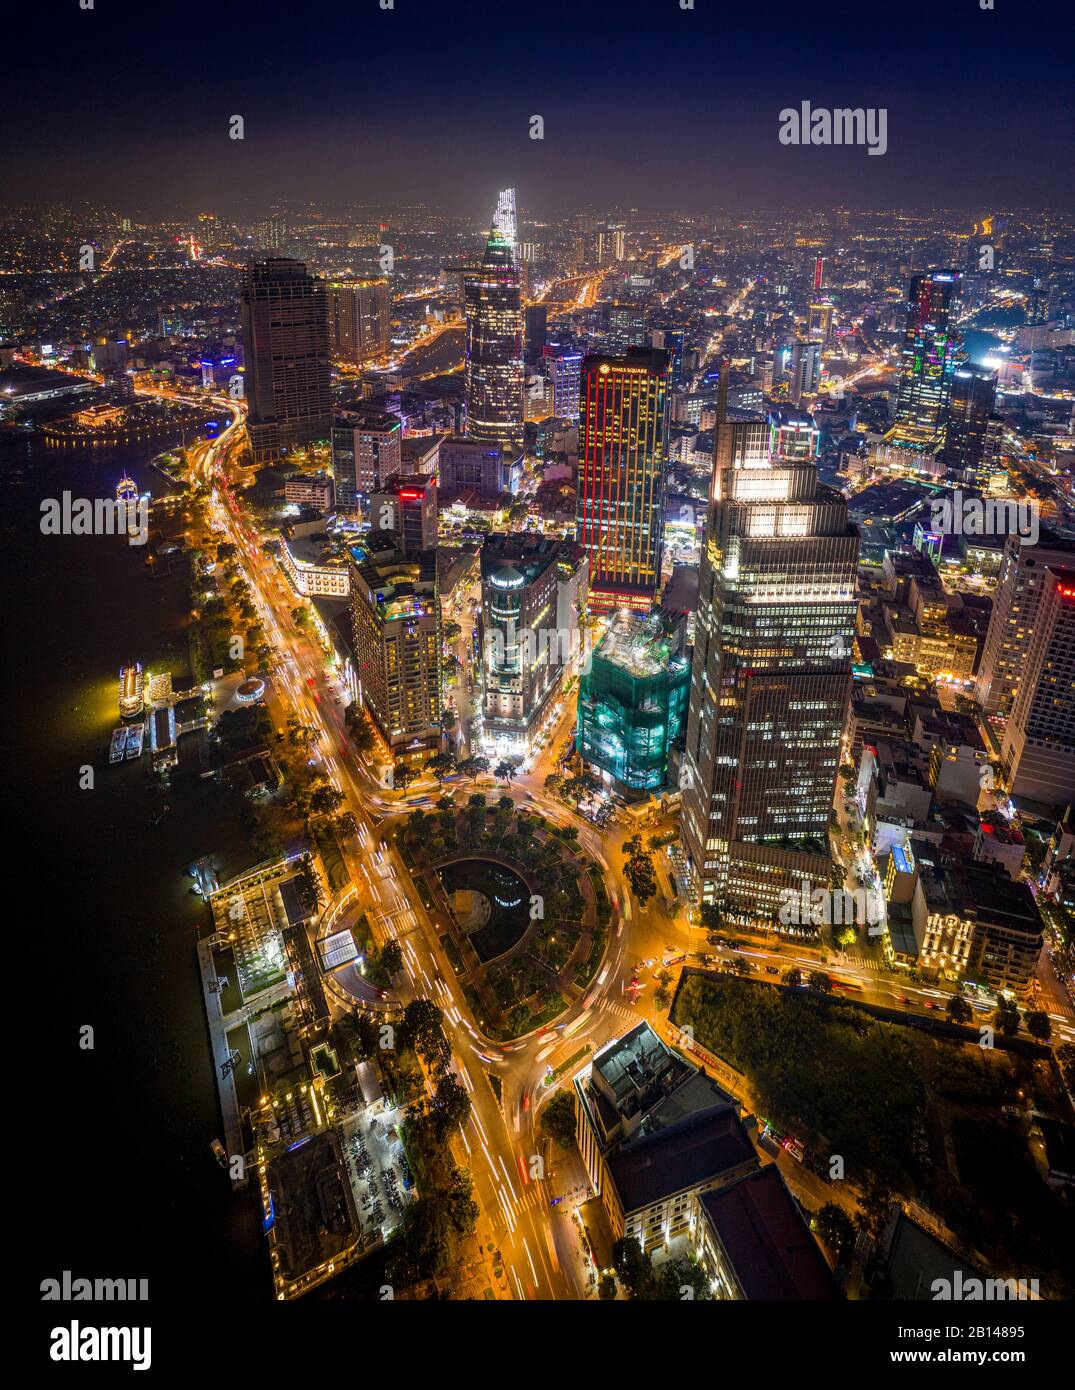 Saigon at night, aerial photography, Vietnam Stock Photo